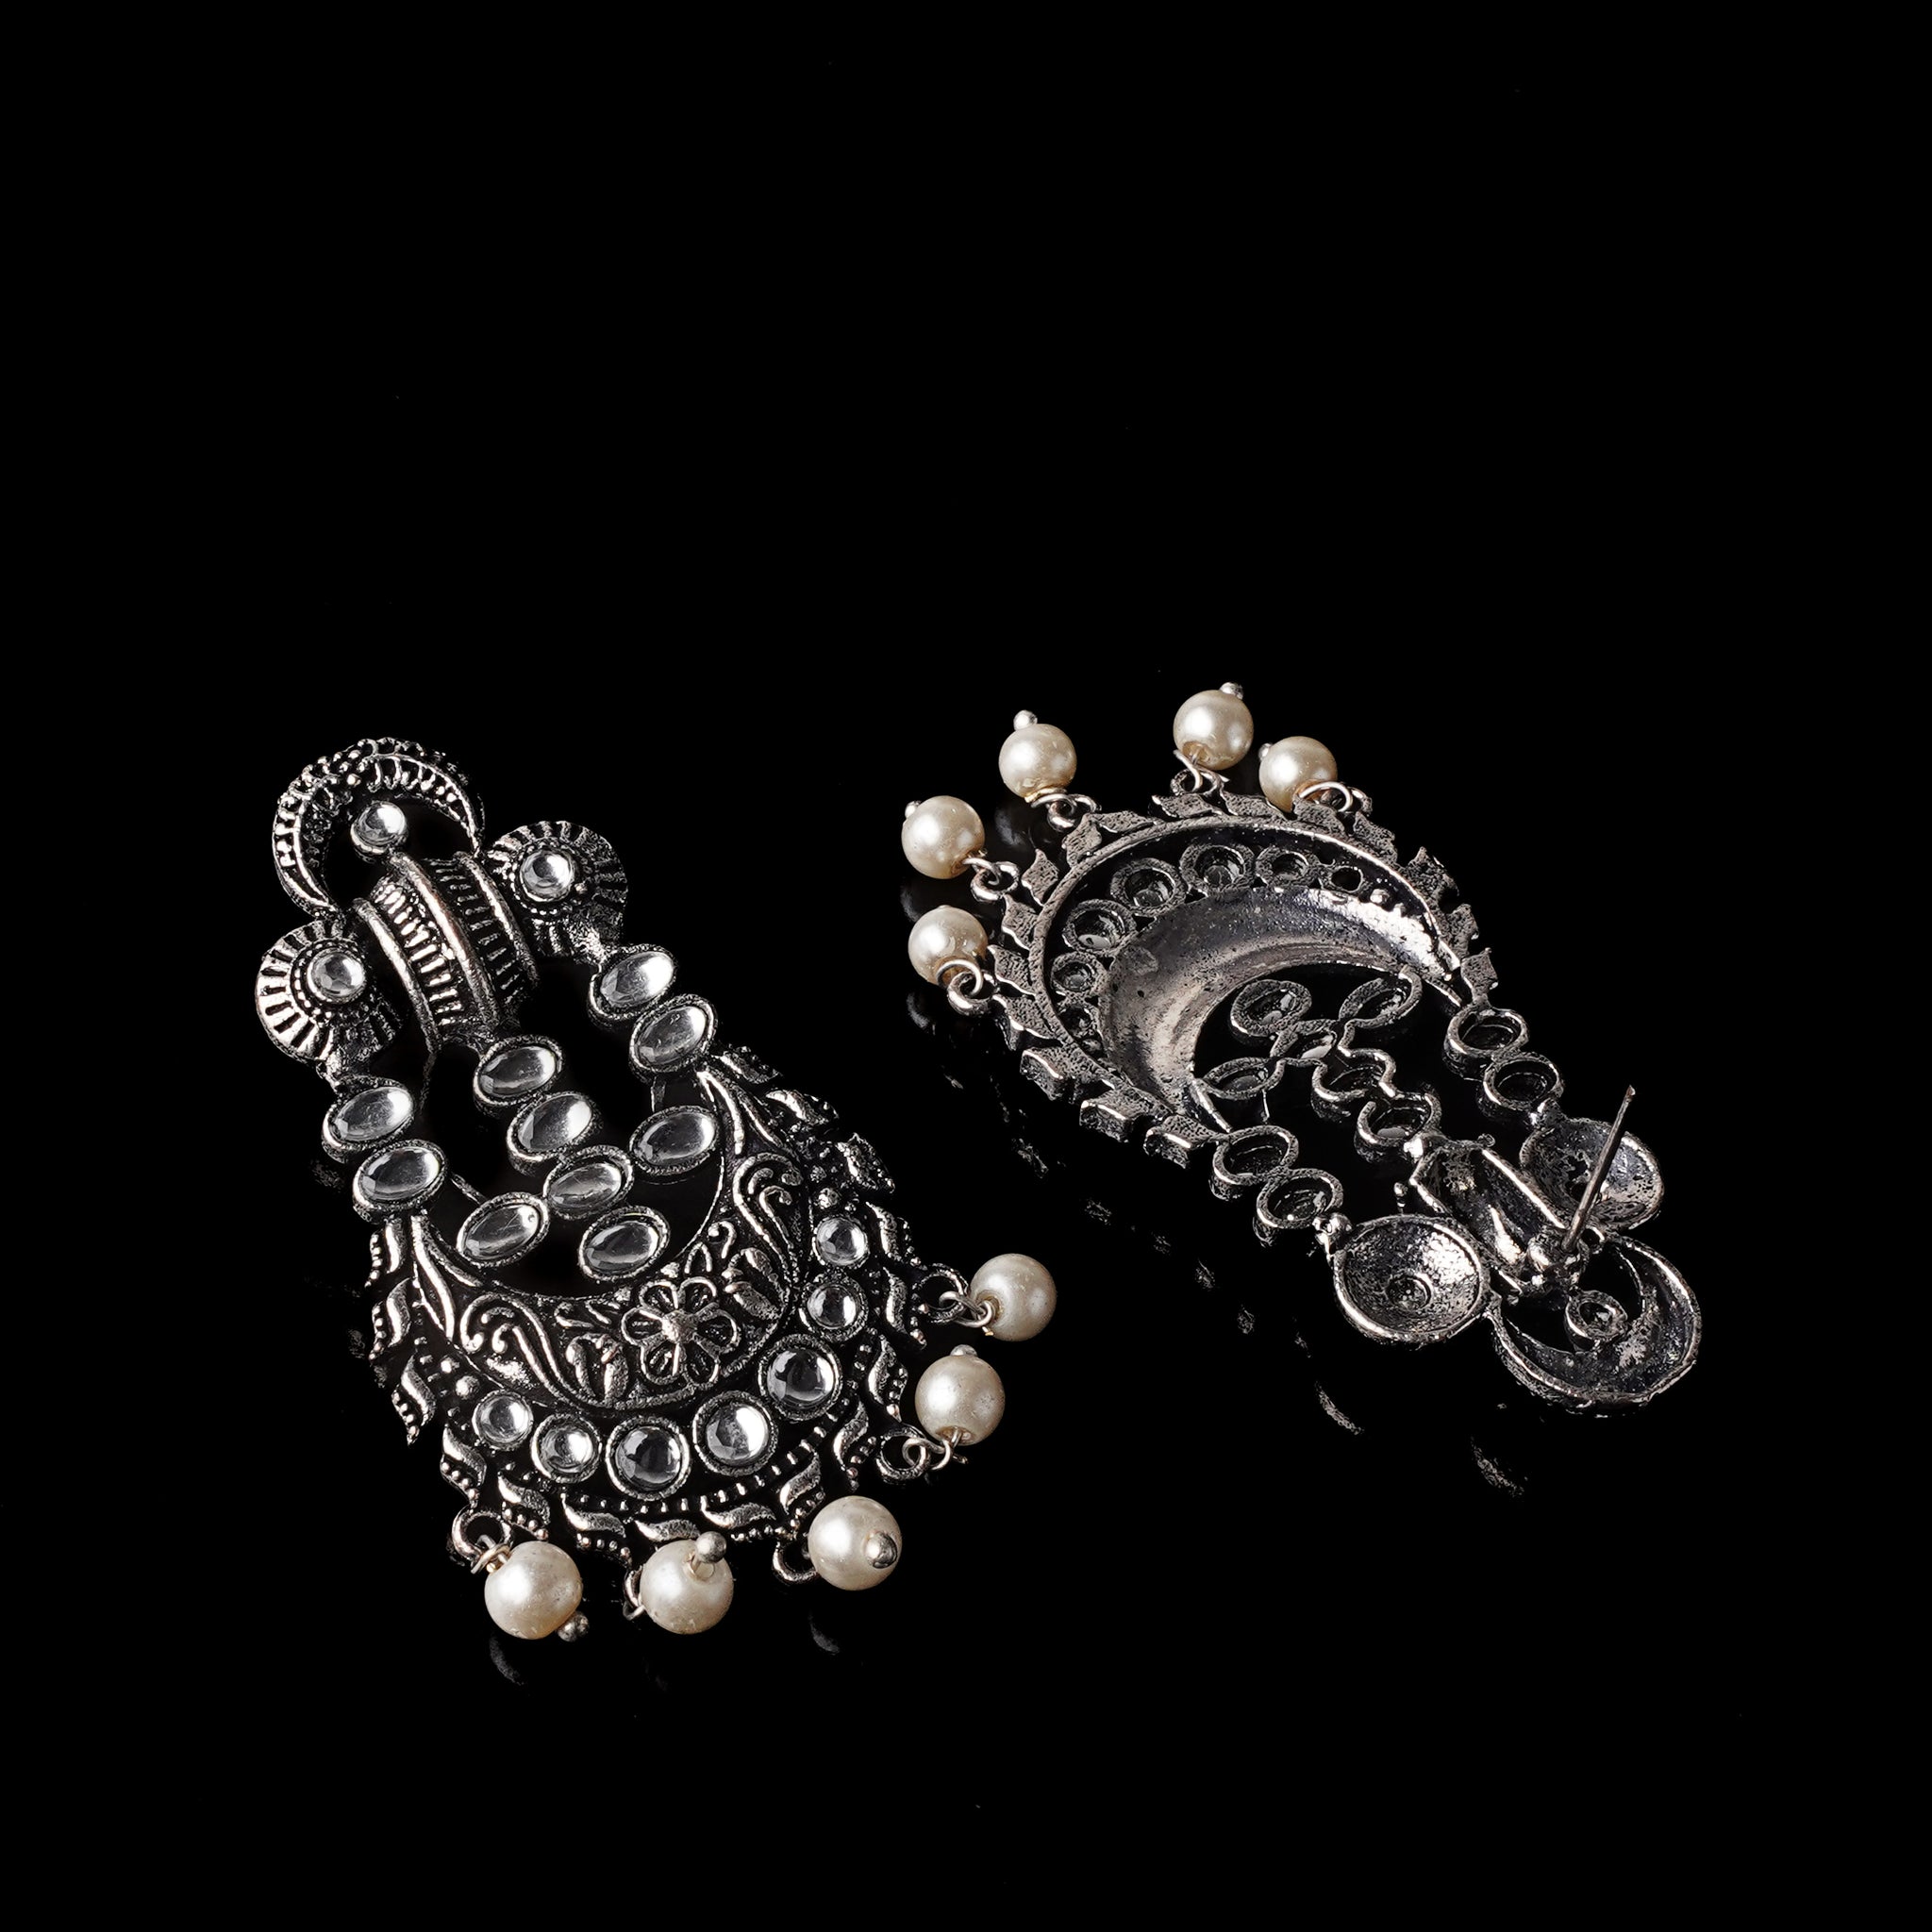 German Silver Dangler Earrings